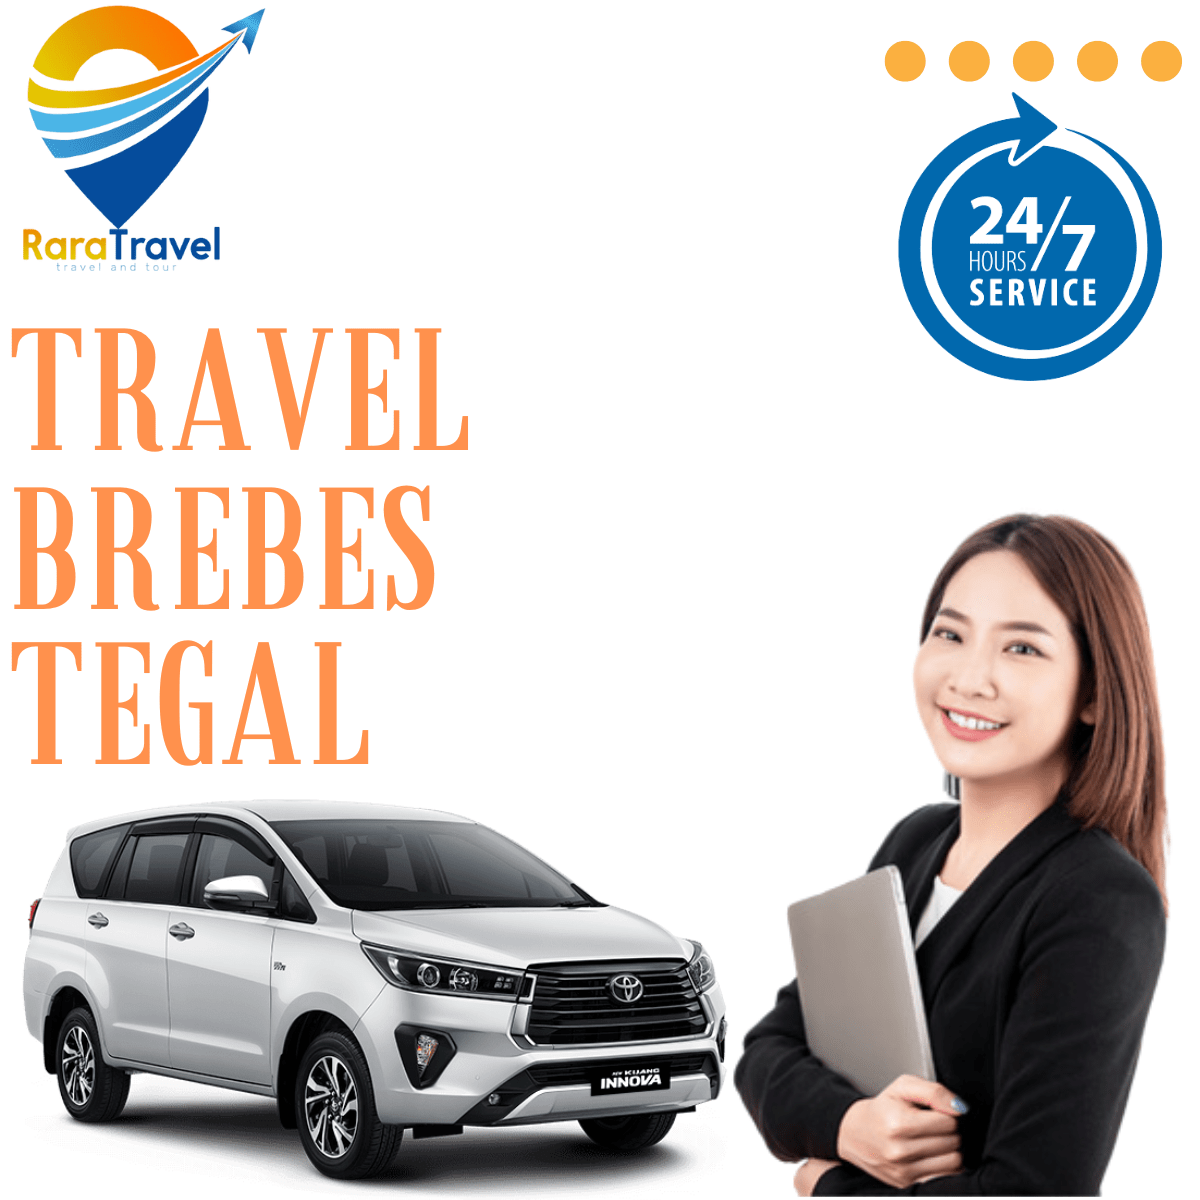 Travel Brebes Tegal - RARA TRAVEL & TOUR